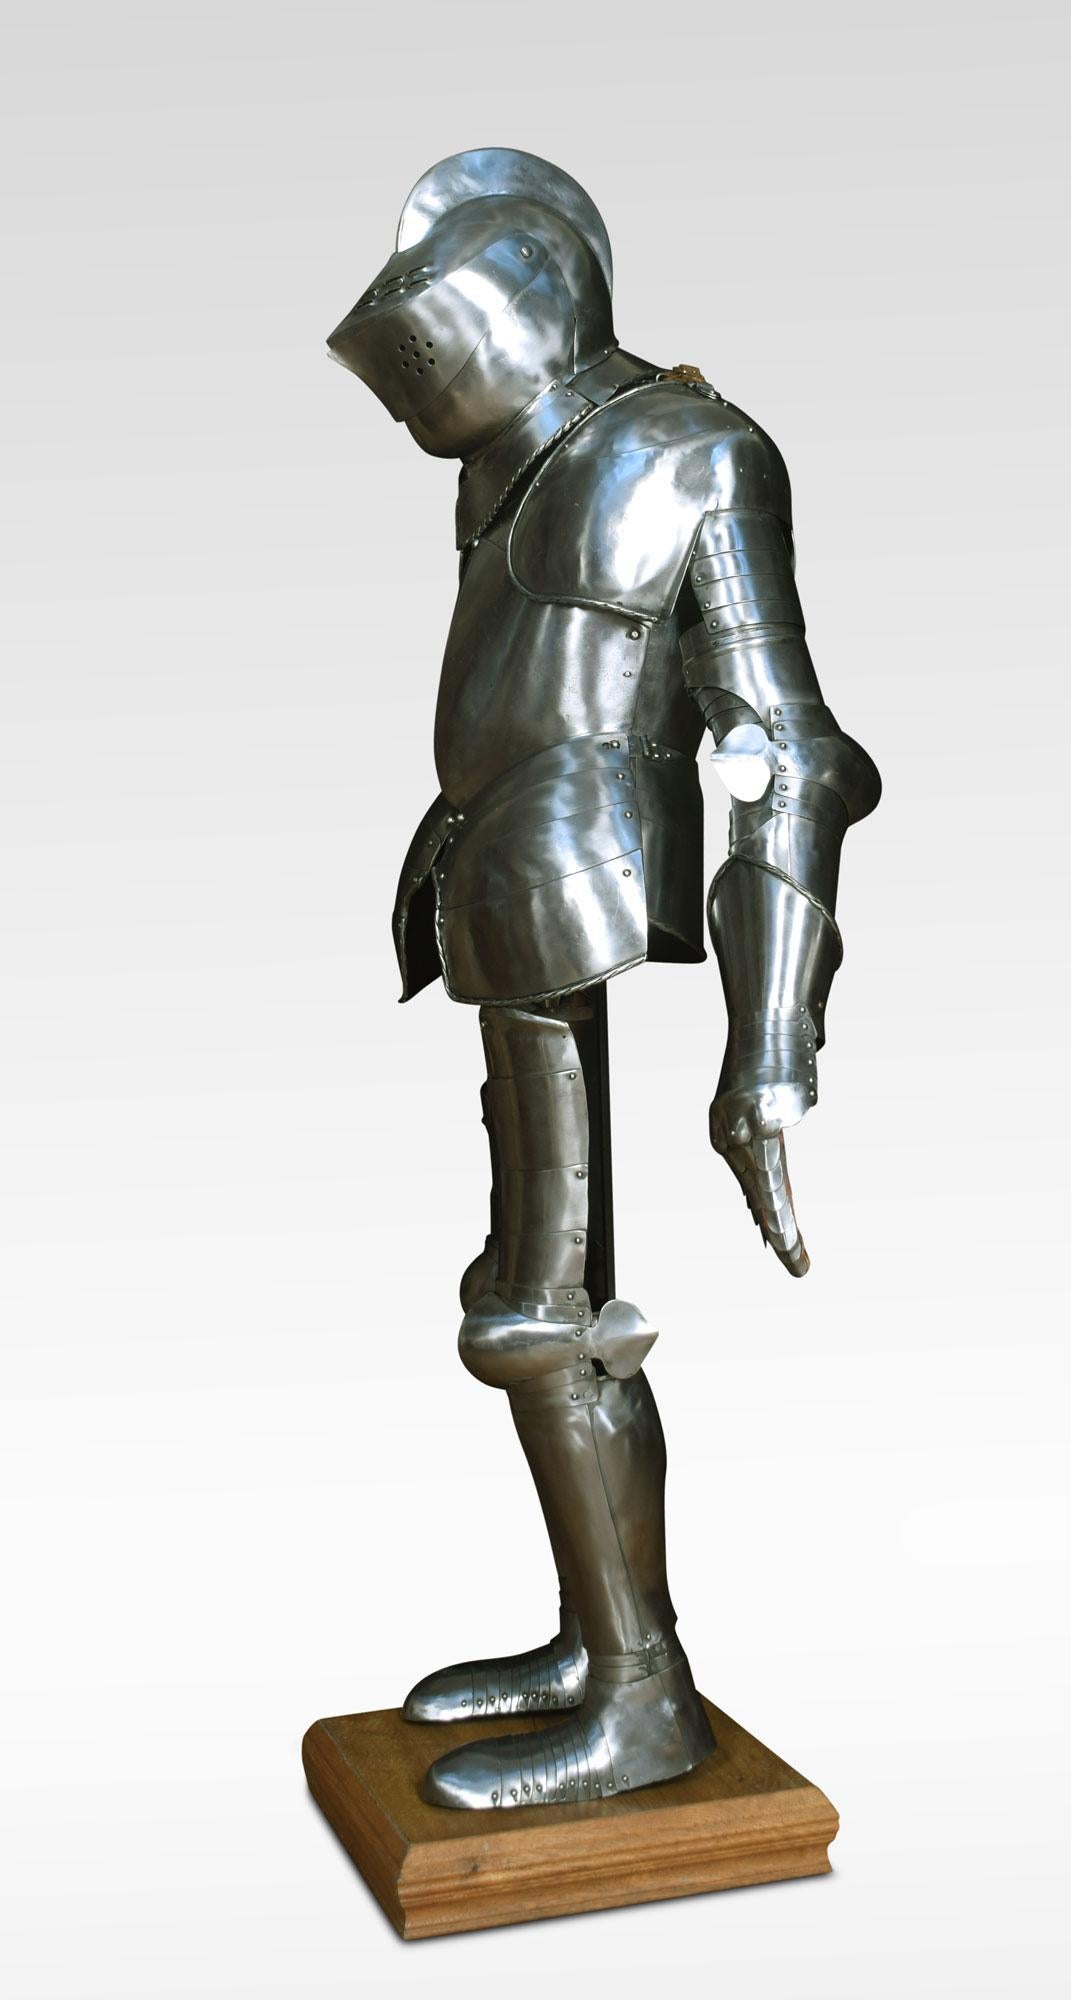 16th century armor